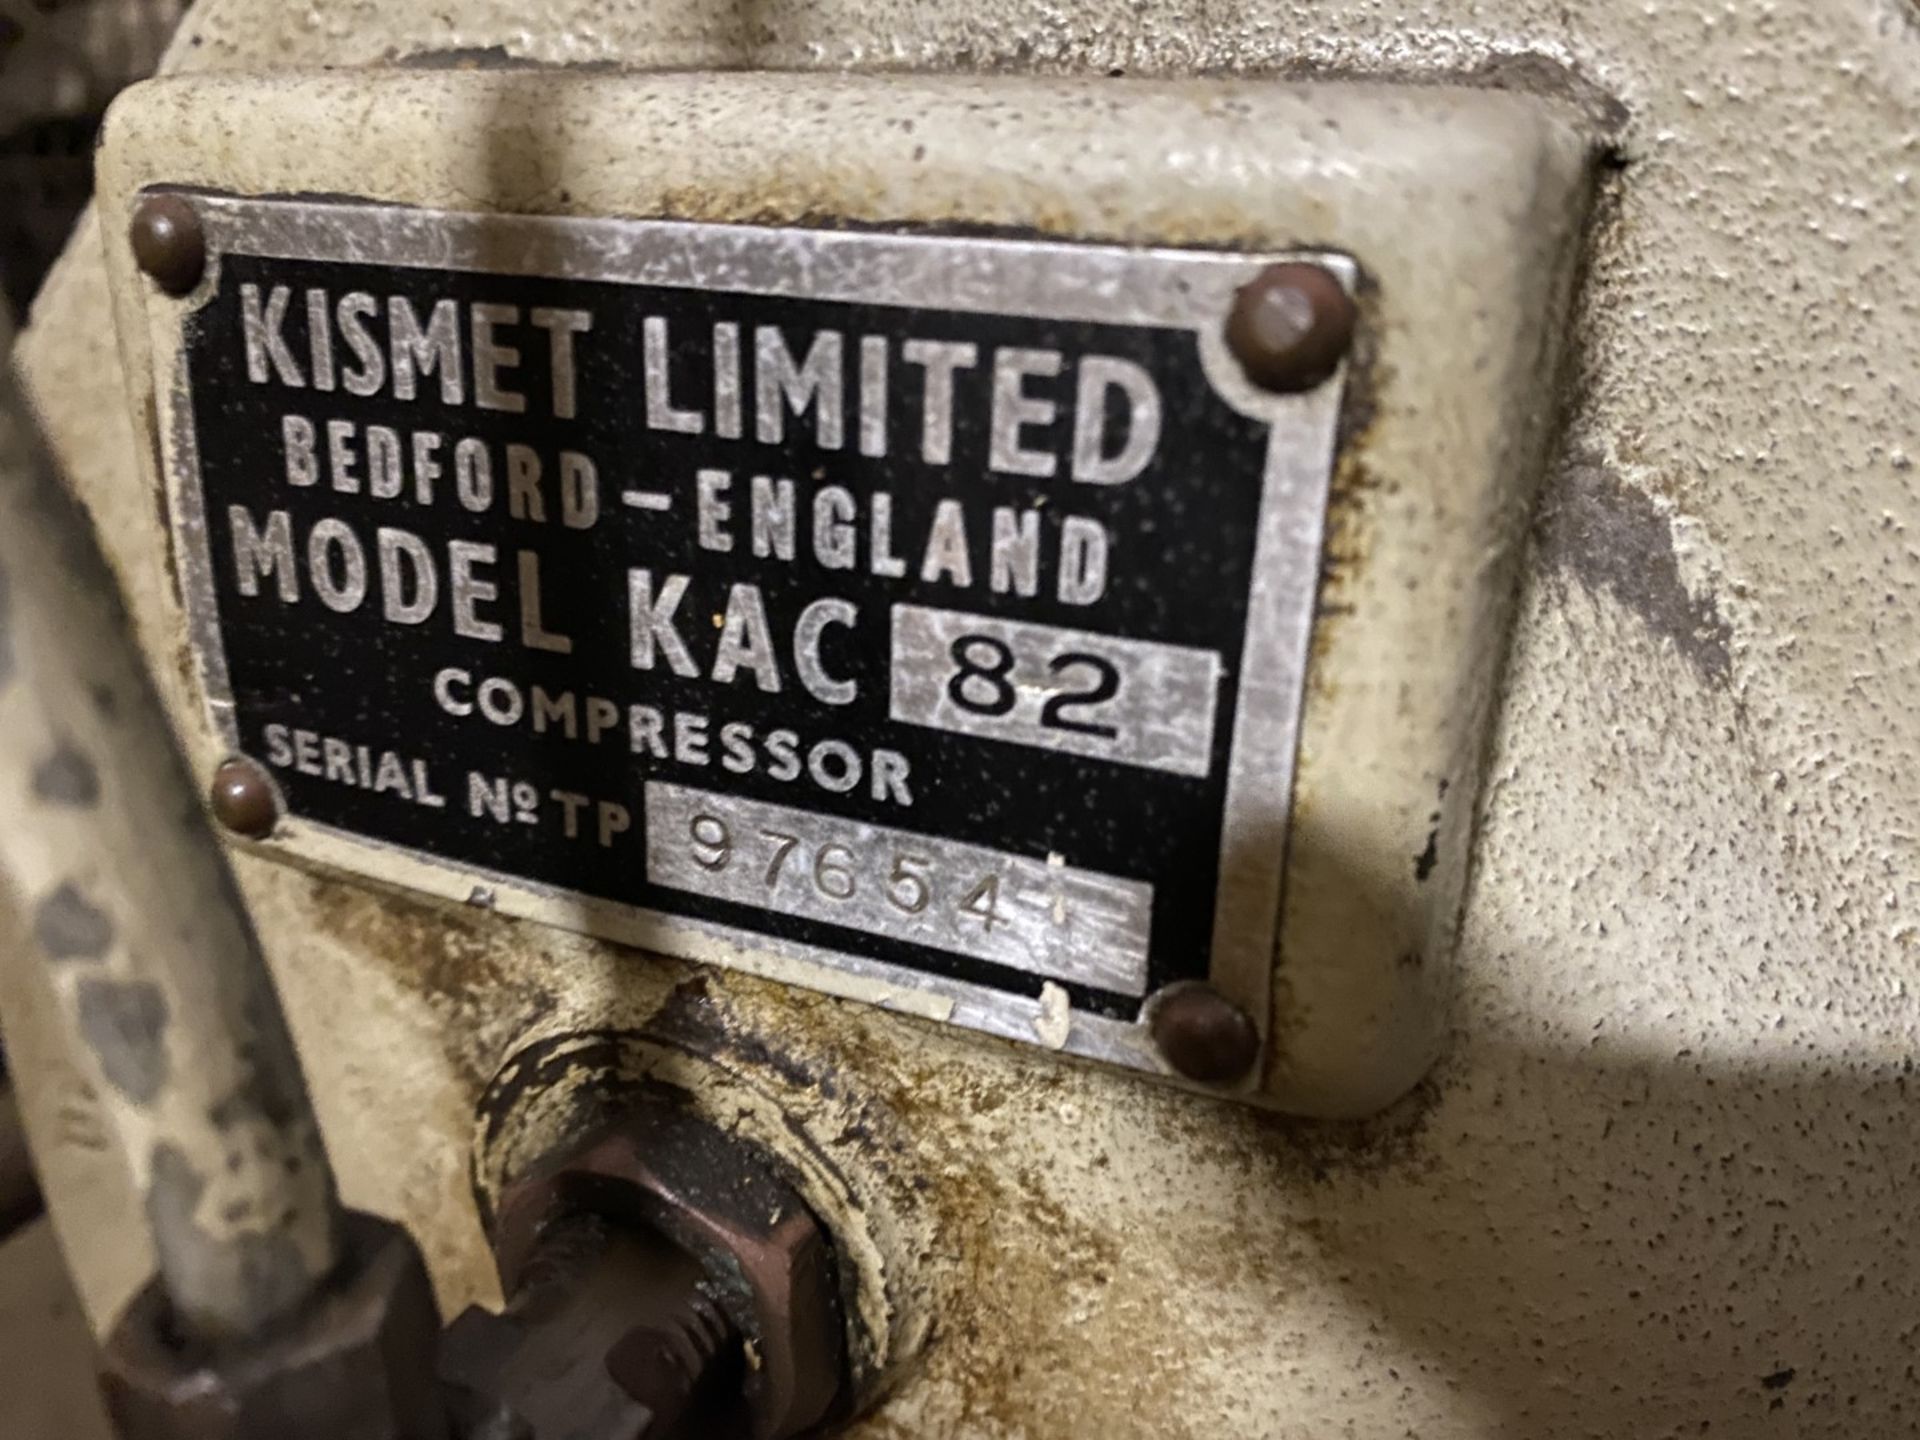 Kismet Compressor Model KAC 82 Serial No. 97654 - Image 2 of 2